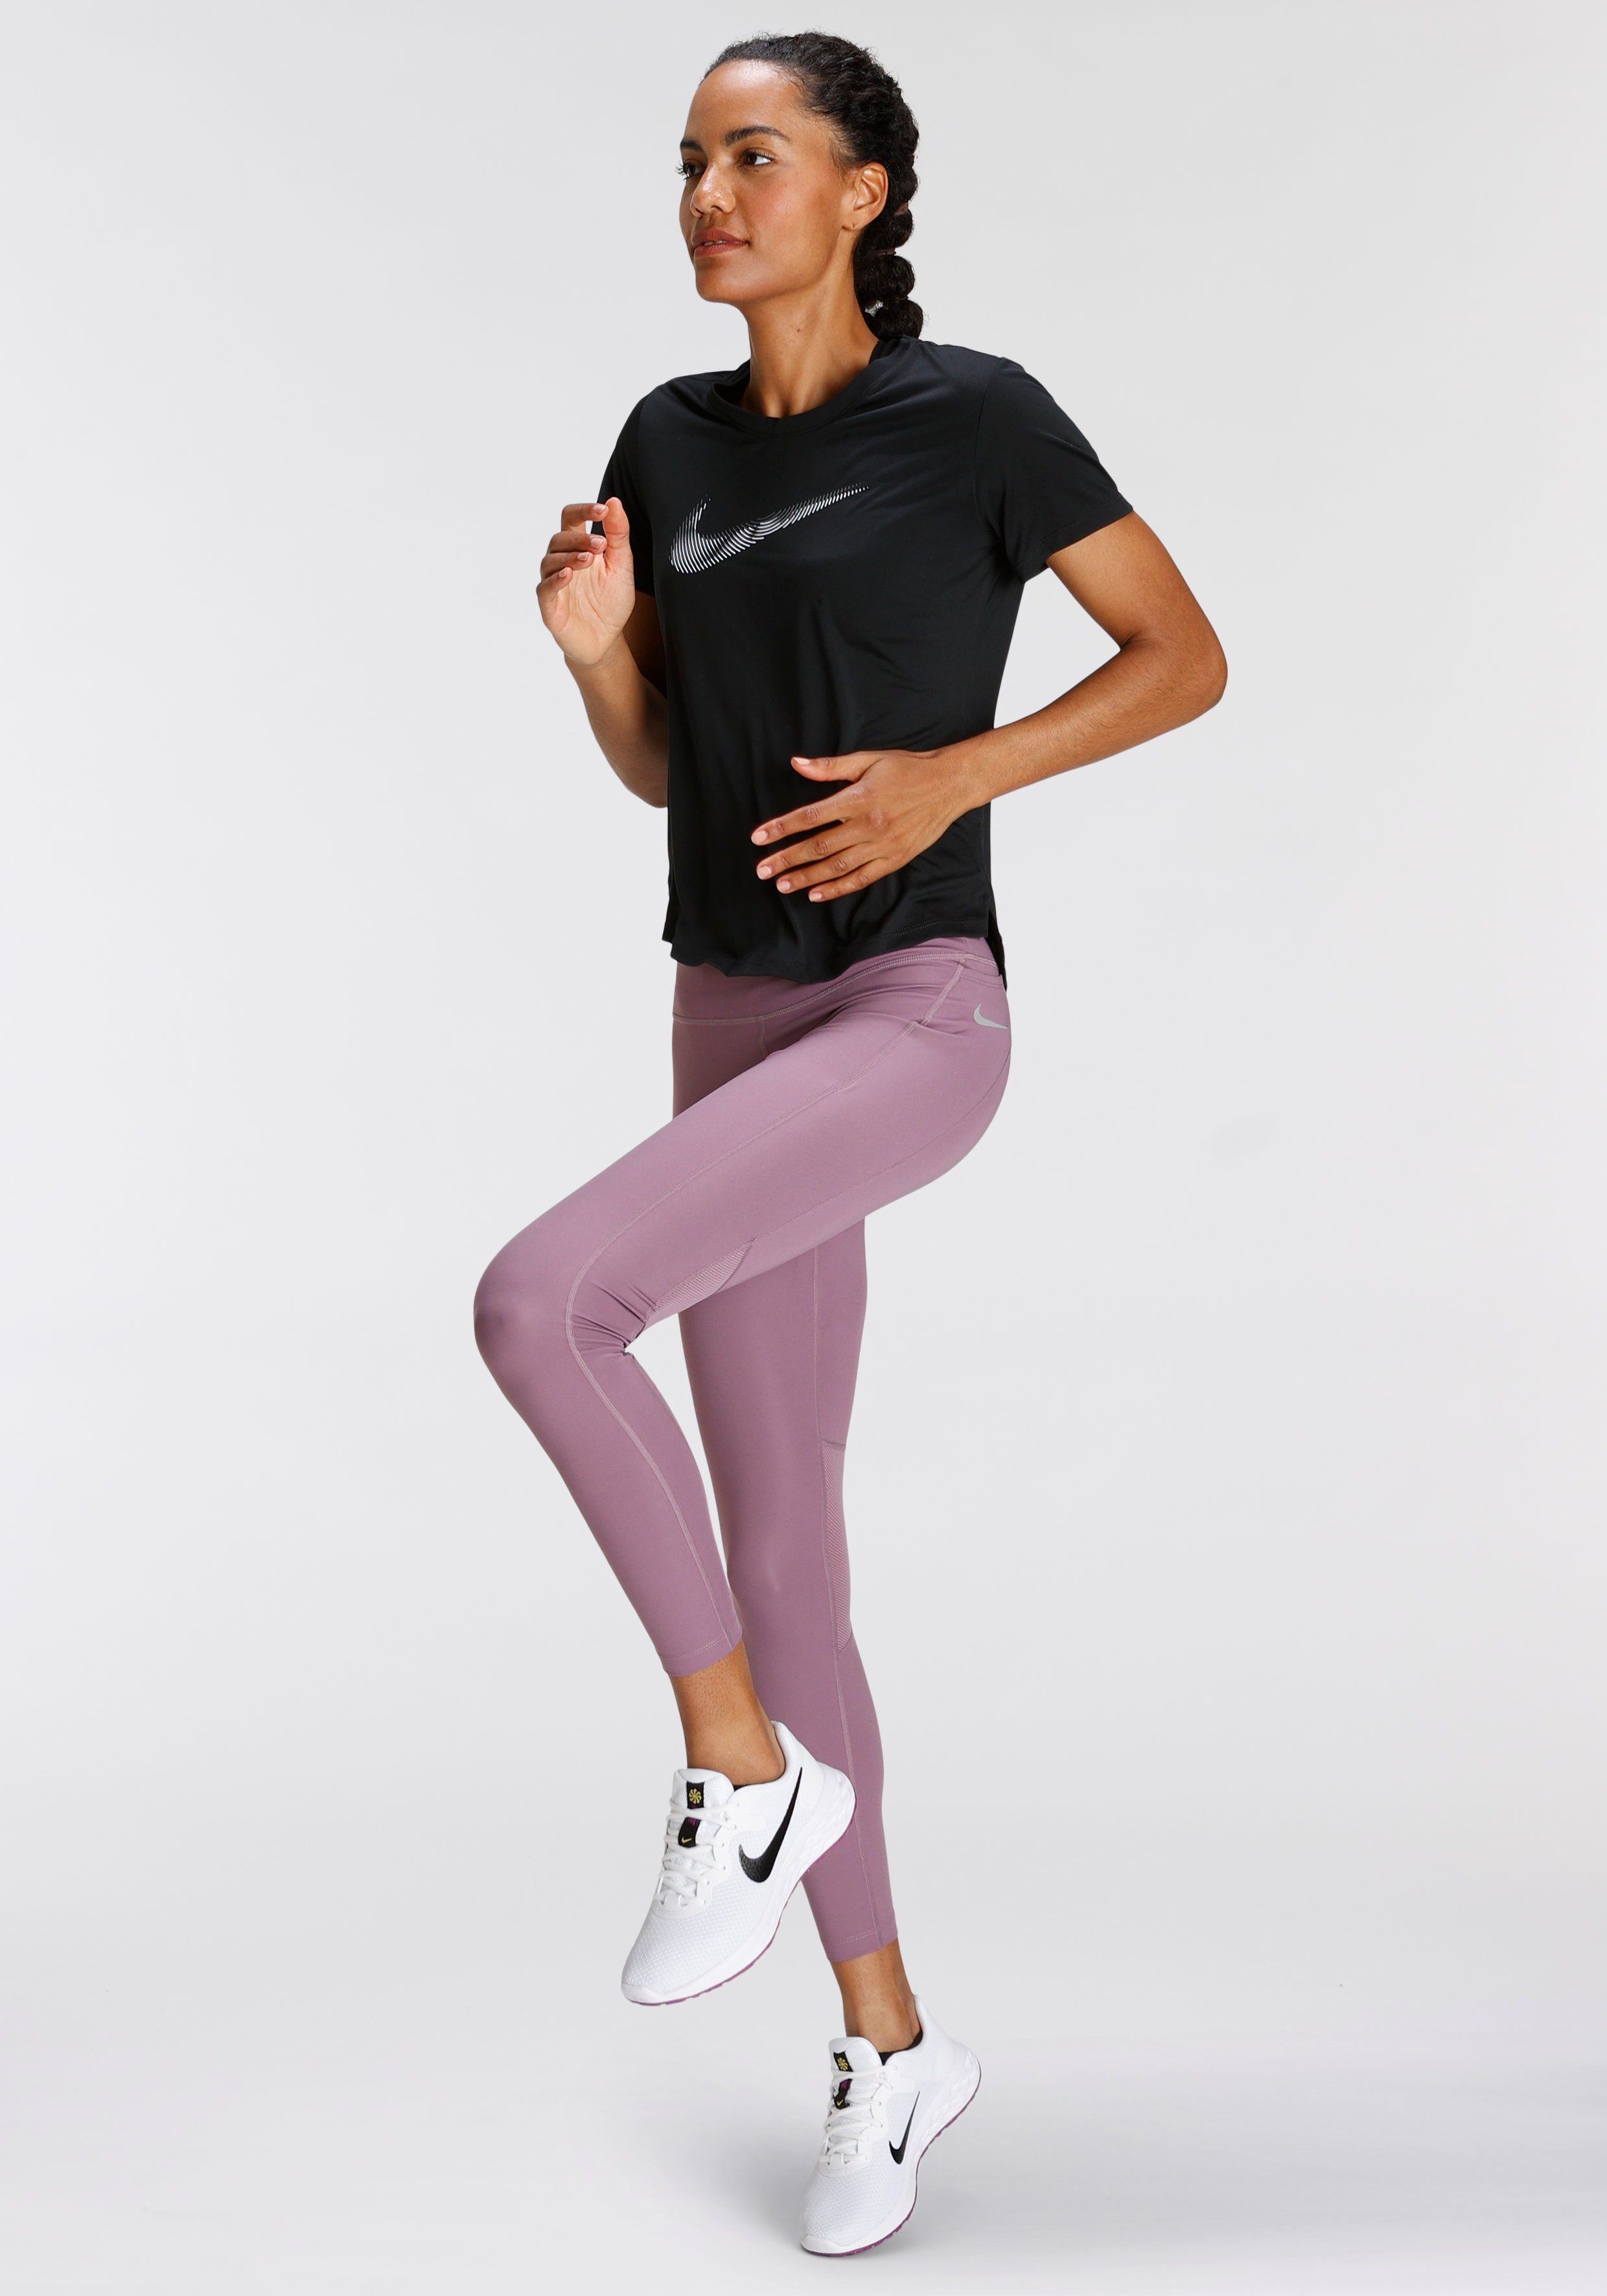 DRI-FIT WOMEN'S GREY SWOOSH TOP Laufshirt Nike BLACK/COOL SHORT-SLEEVE RUNNING